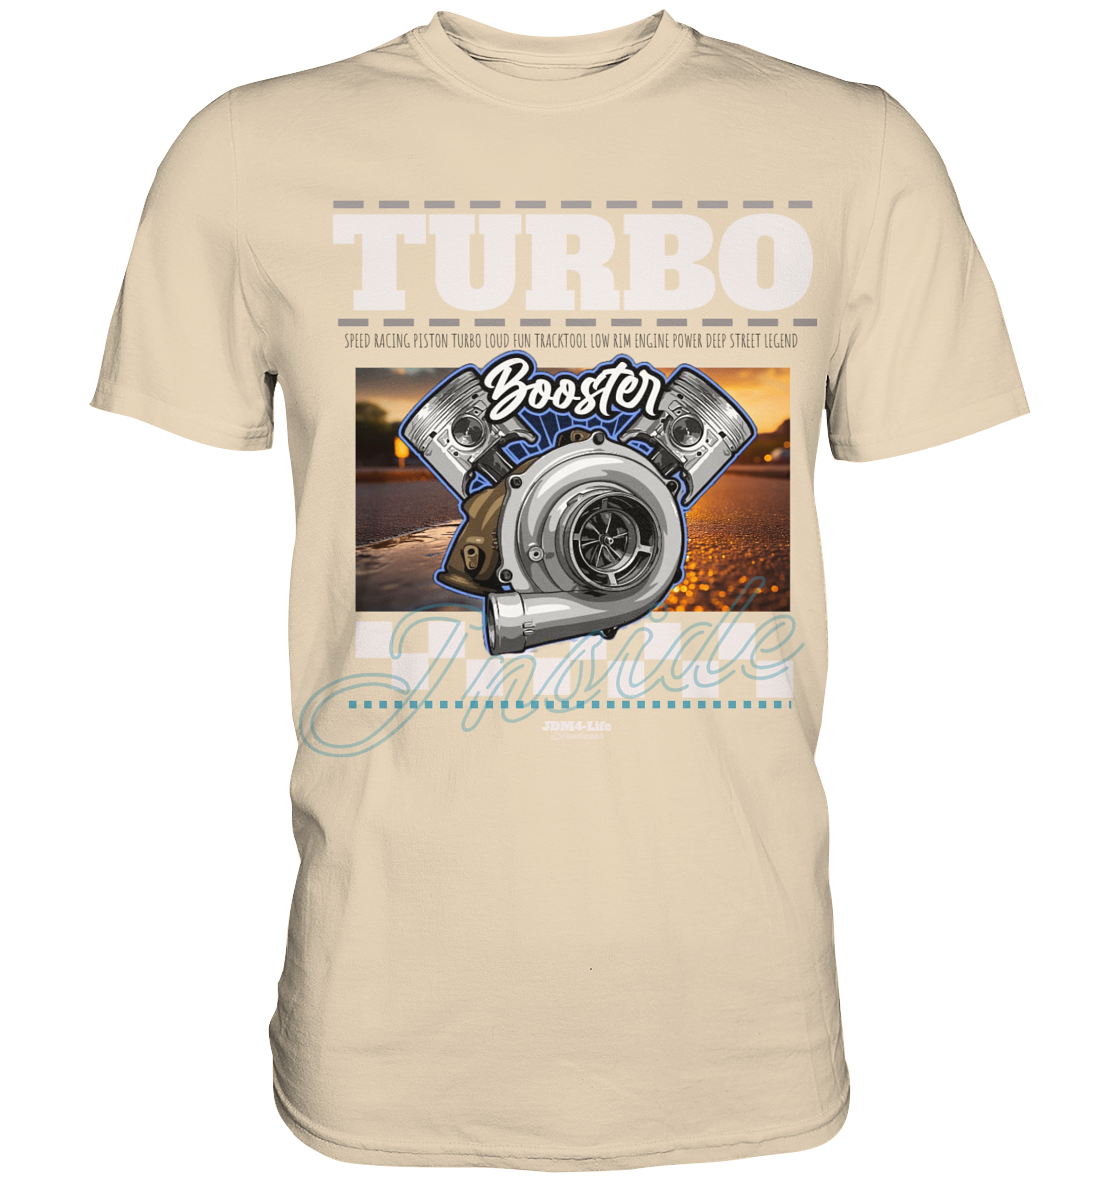 Turbo Booster  - Premium Shirt